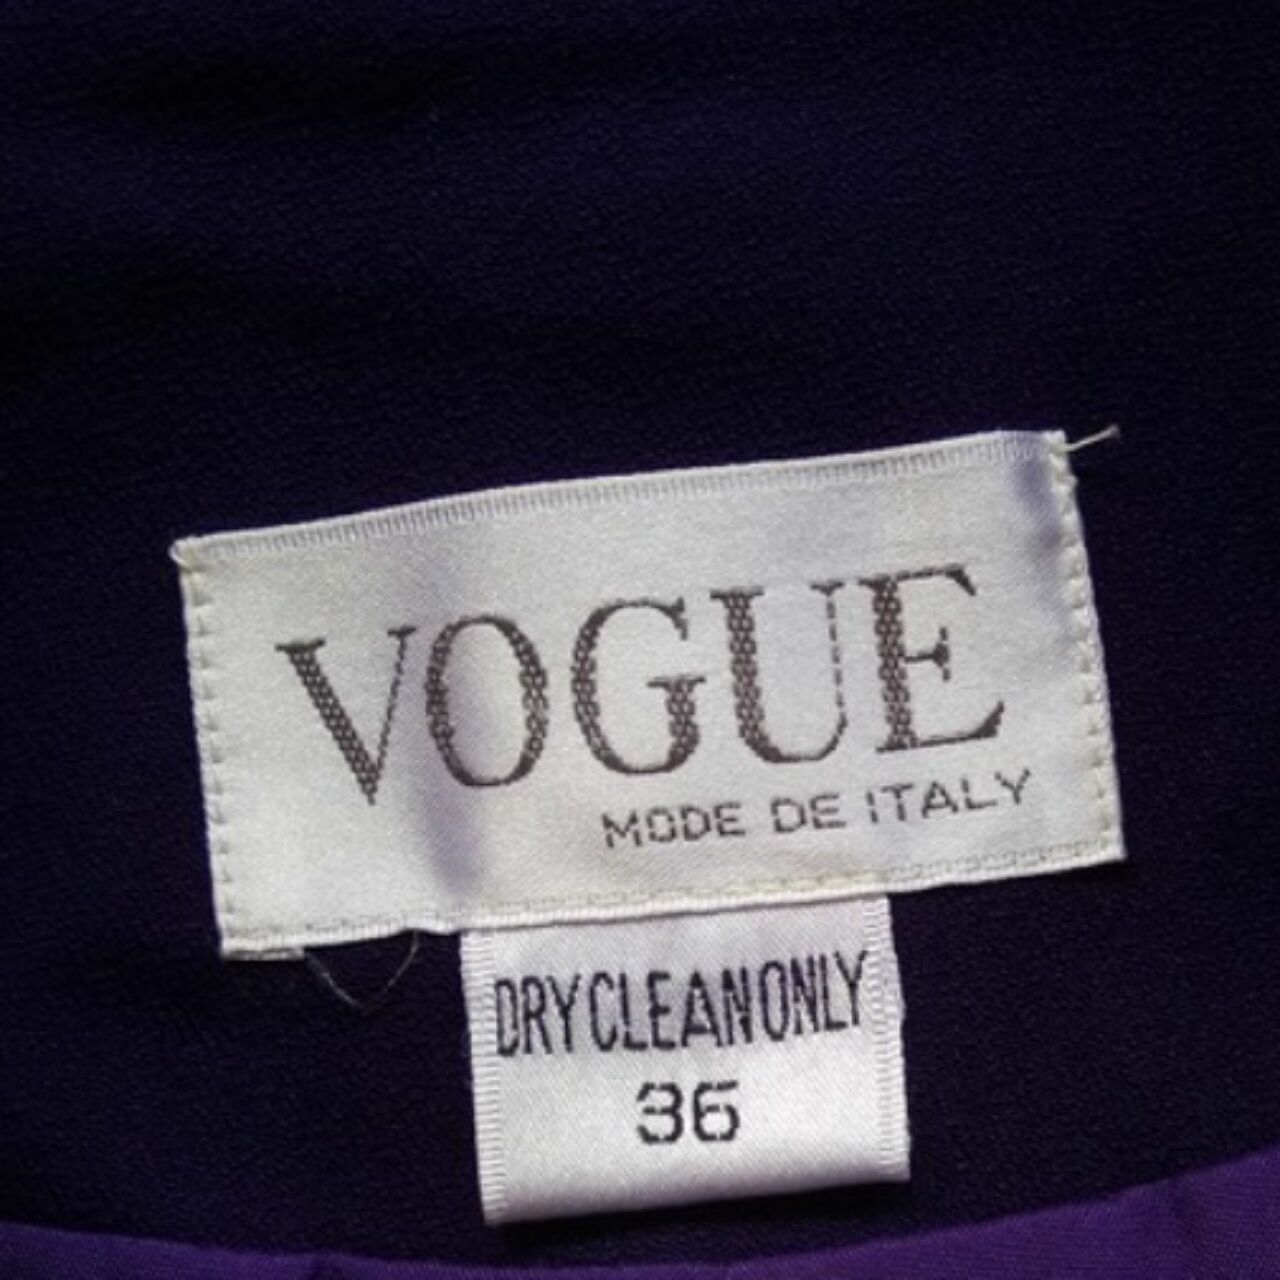 Vintage Vogue Embroidered Blue Blazer